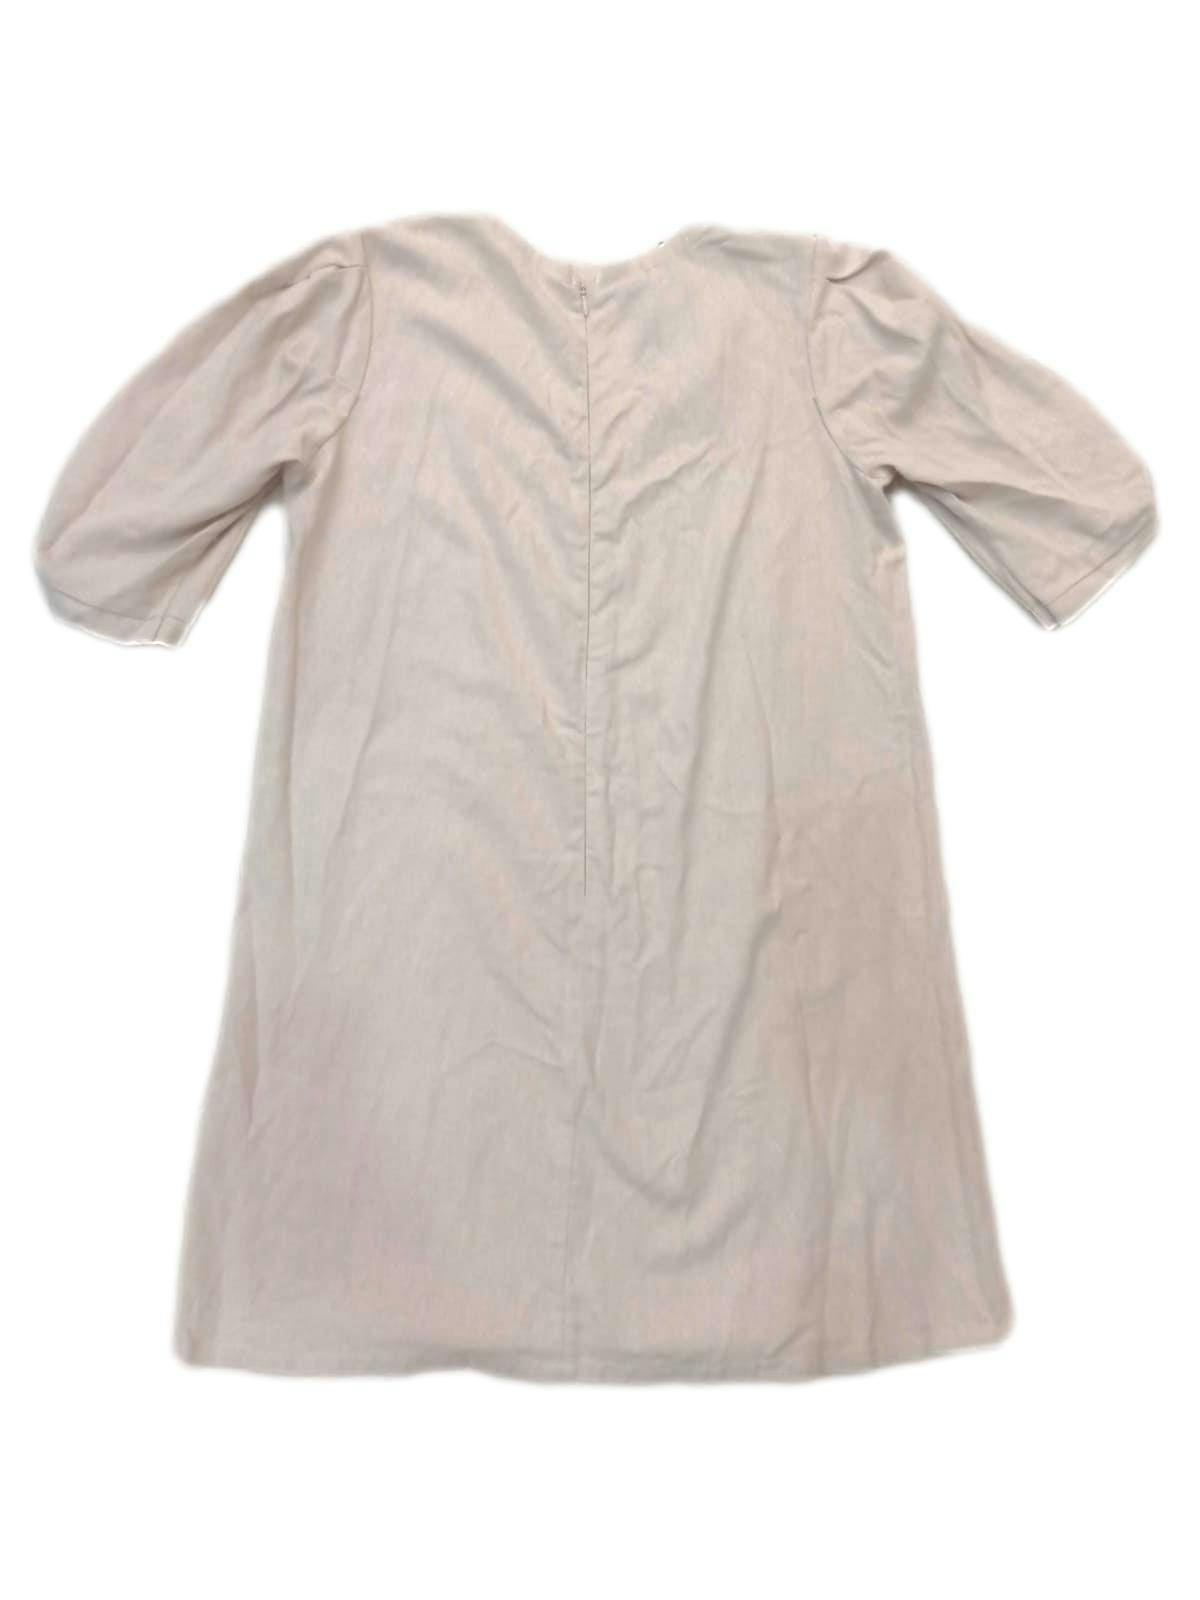 Vestido swenia beige, manga 3/4, cierre posterior, cuello redondo. Busto: 84 cm, Largo: 80 cm. Nuevo con etiqueta